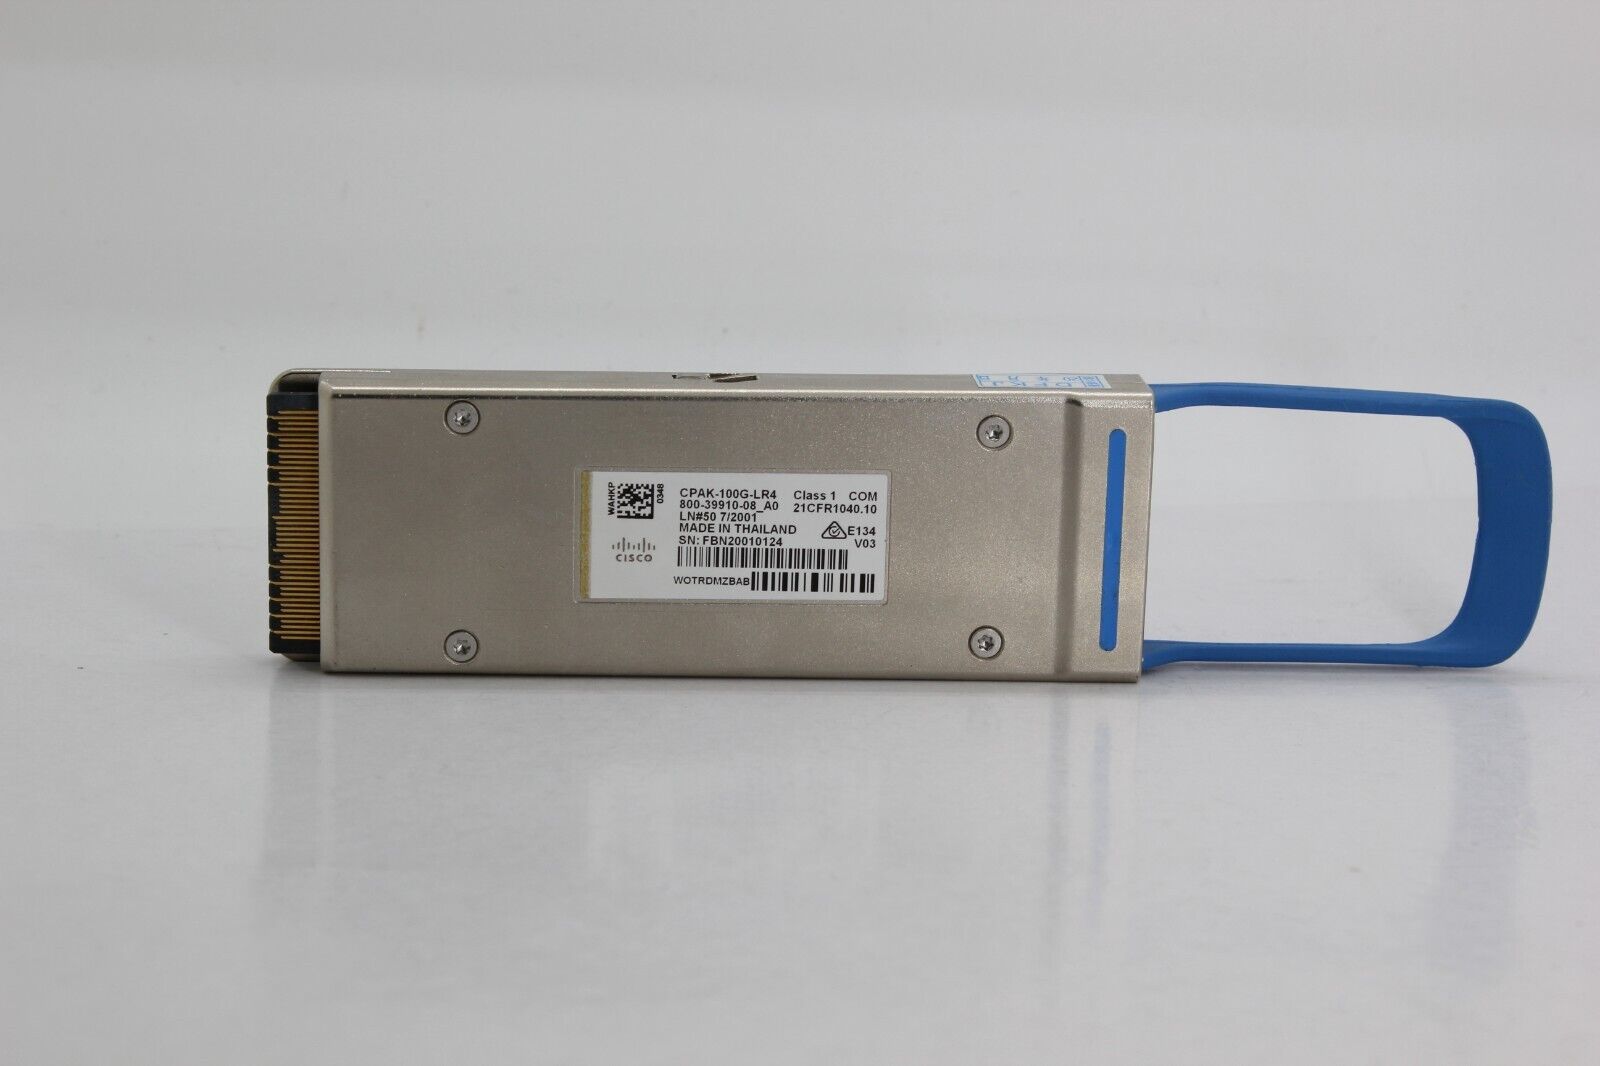 Cisco CPAK-100G-LR4 800-39910-08 100GBASE-LR4 SMF Genuine Transceiver